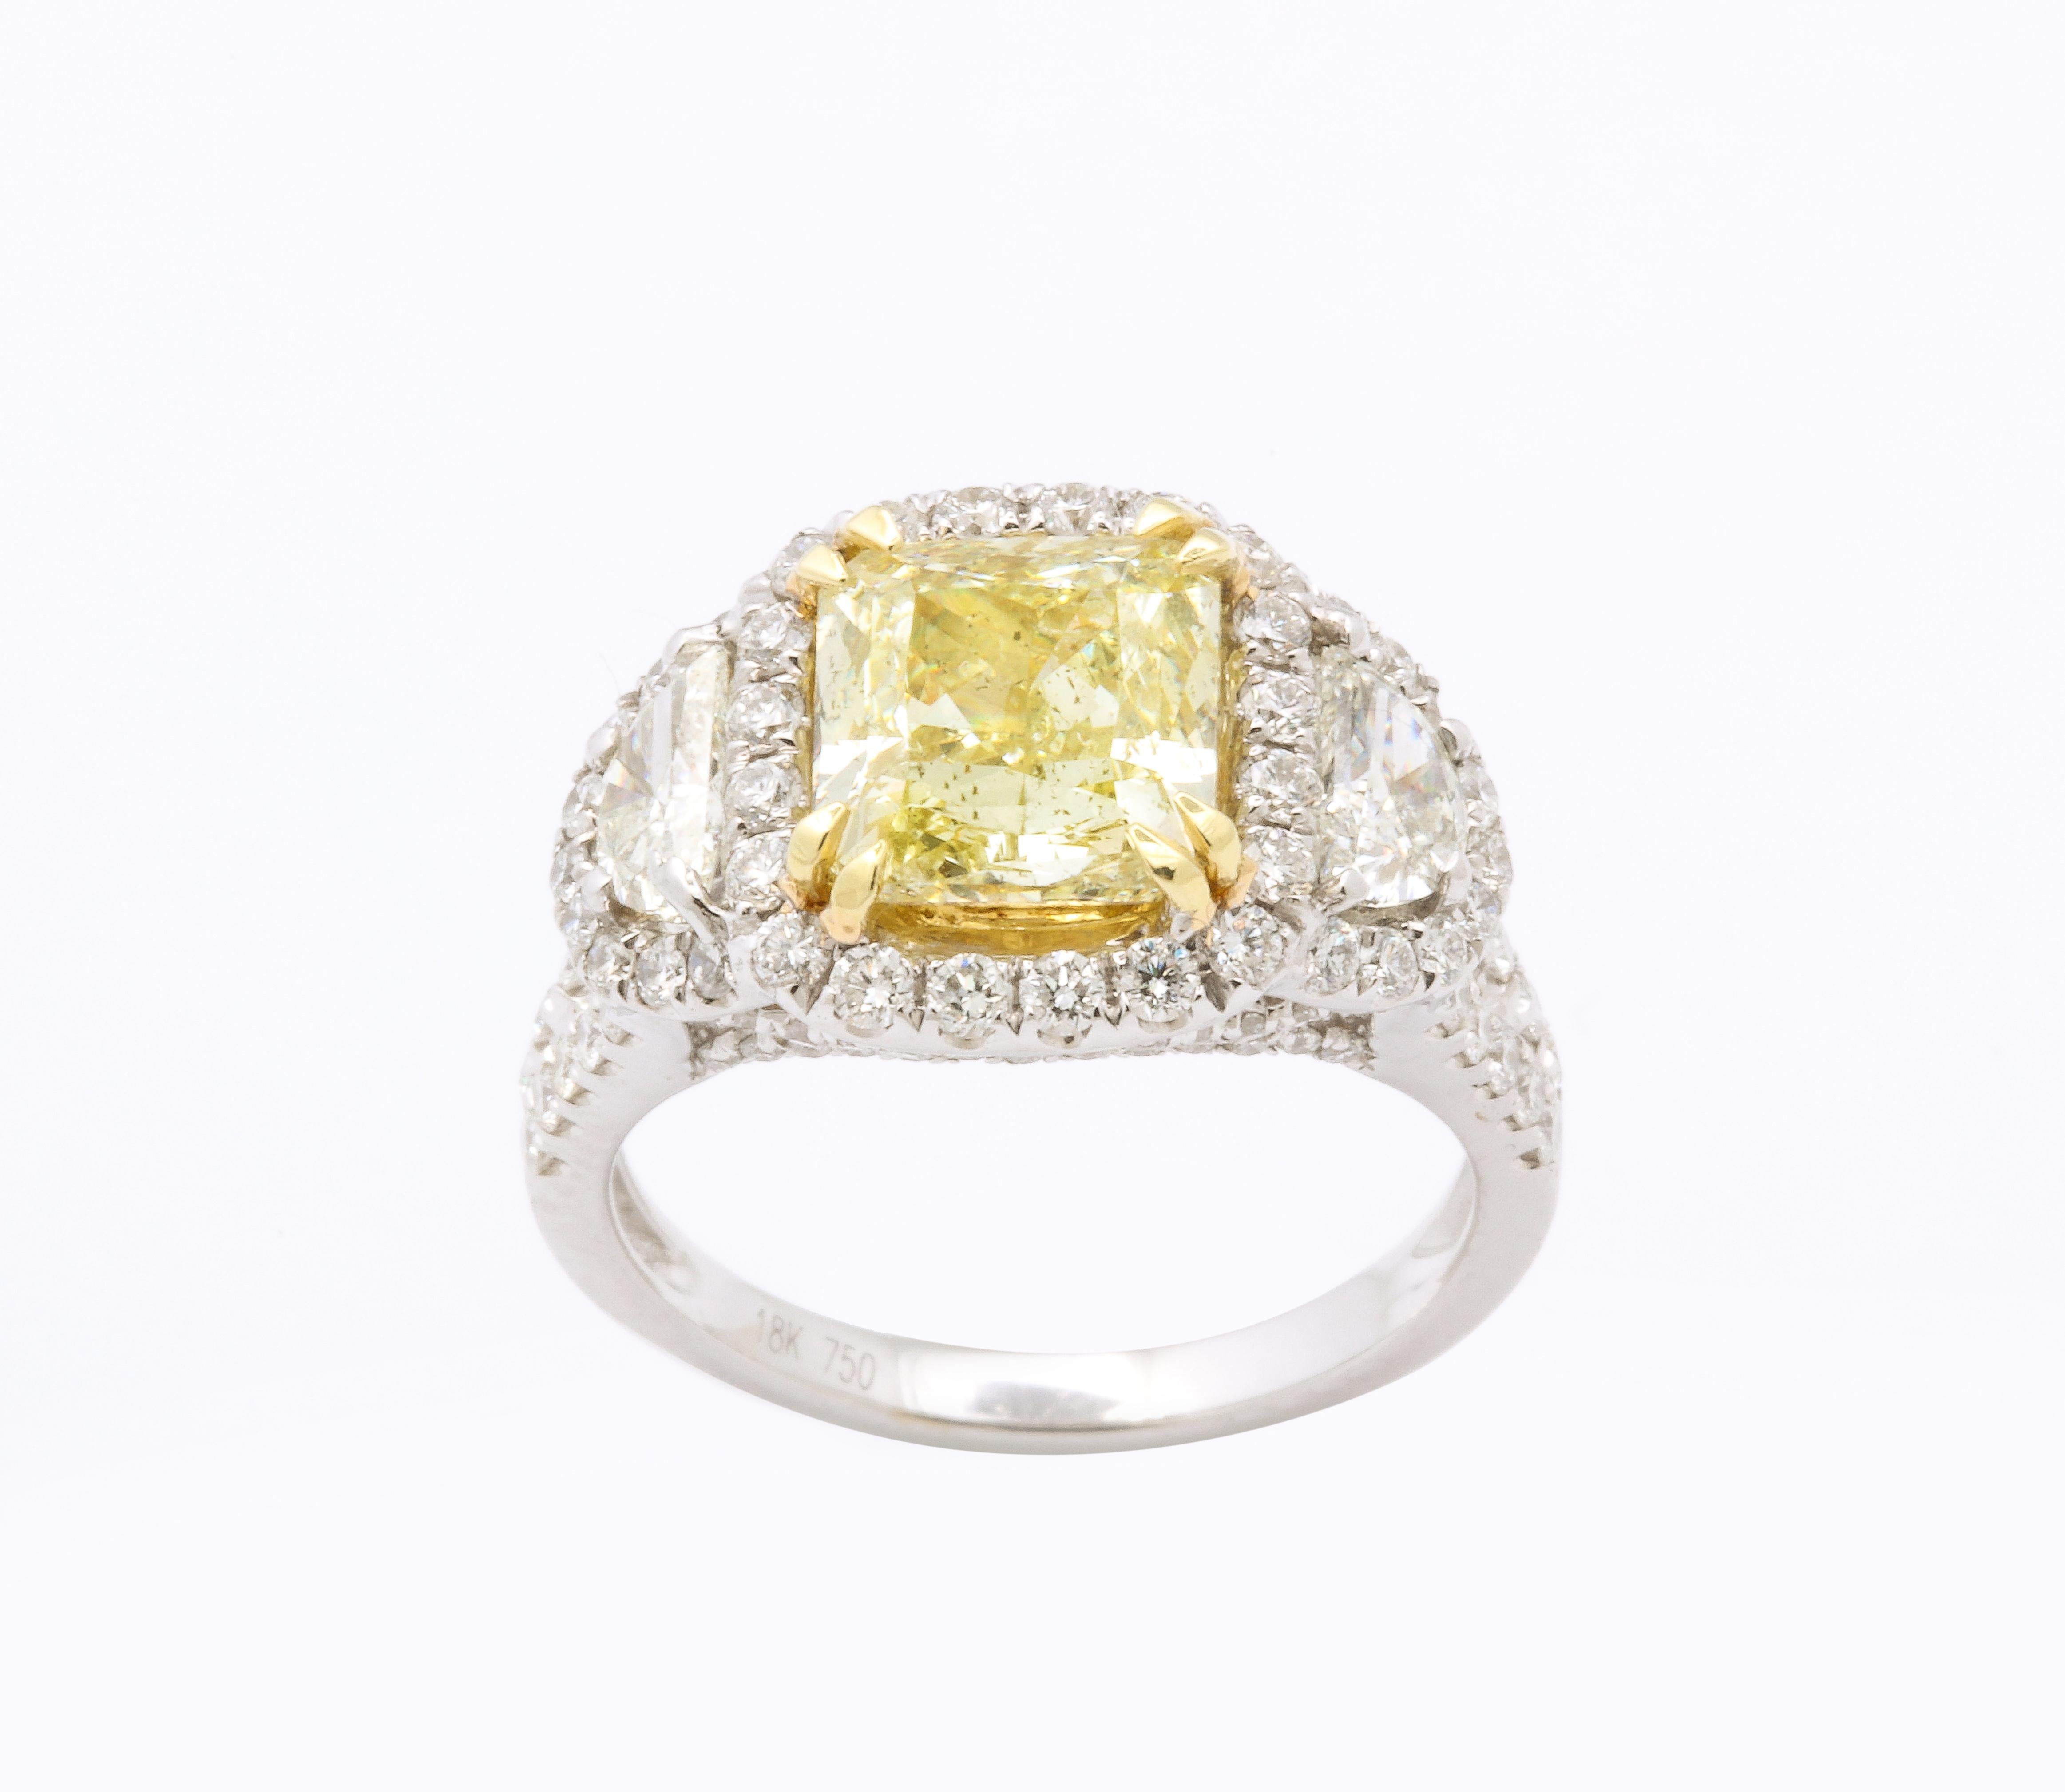 18K Gold Diamond Cocktail Ring with 3.05 Carat Yellow Diamond 2